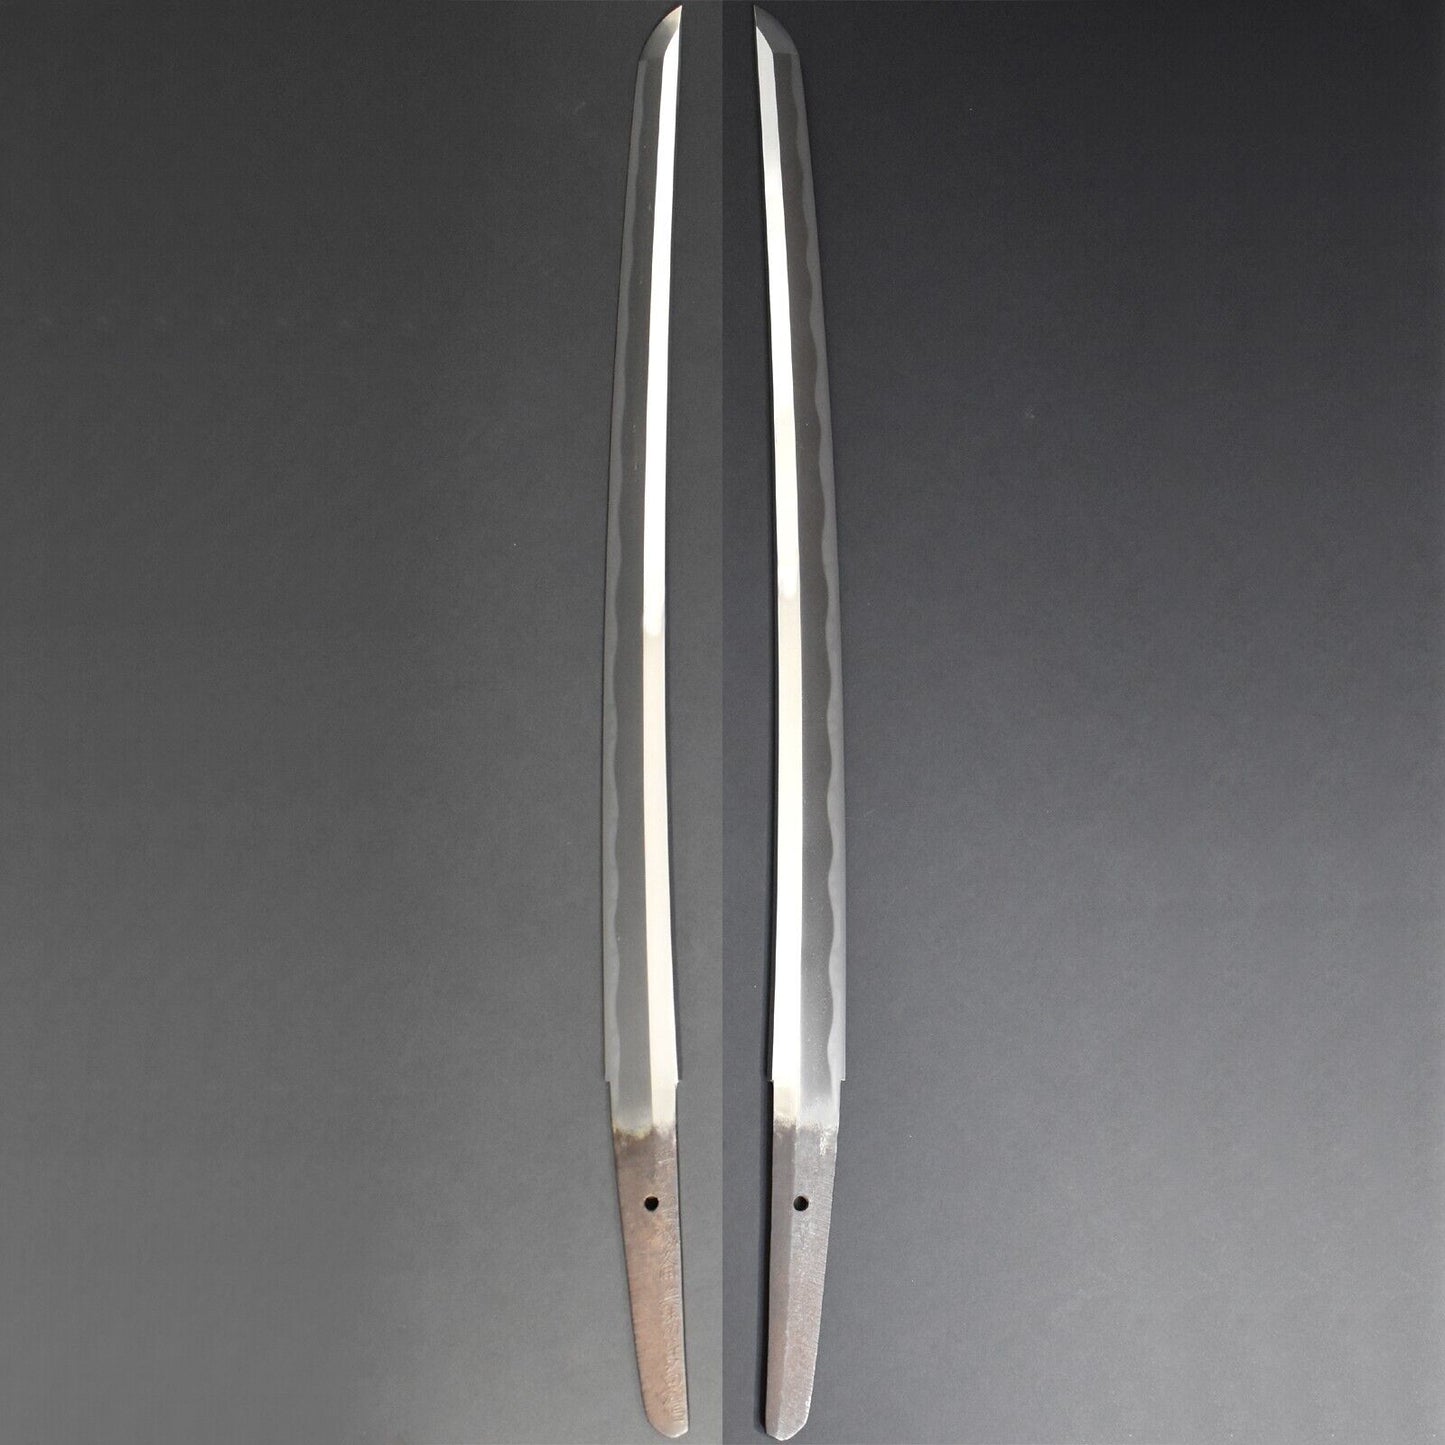 Authentic Antique Original Japanese Katana Sword Wakizashi Kanenobu Signed Collectible Samurai Blade.